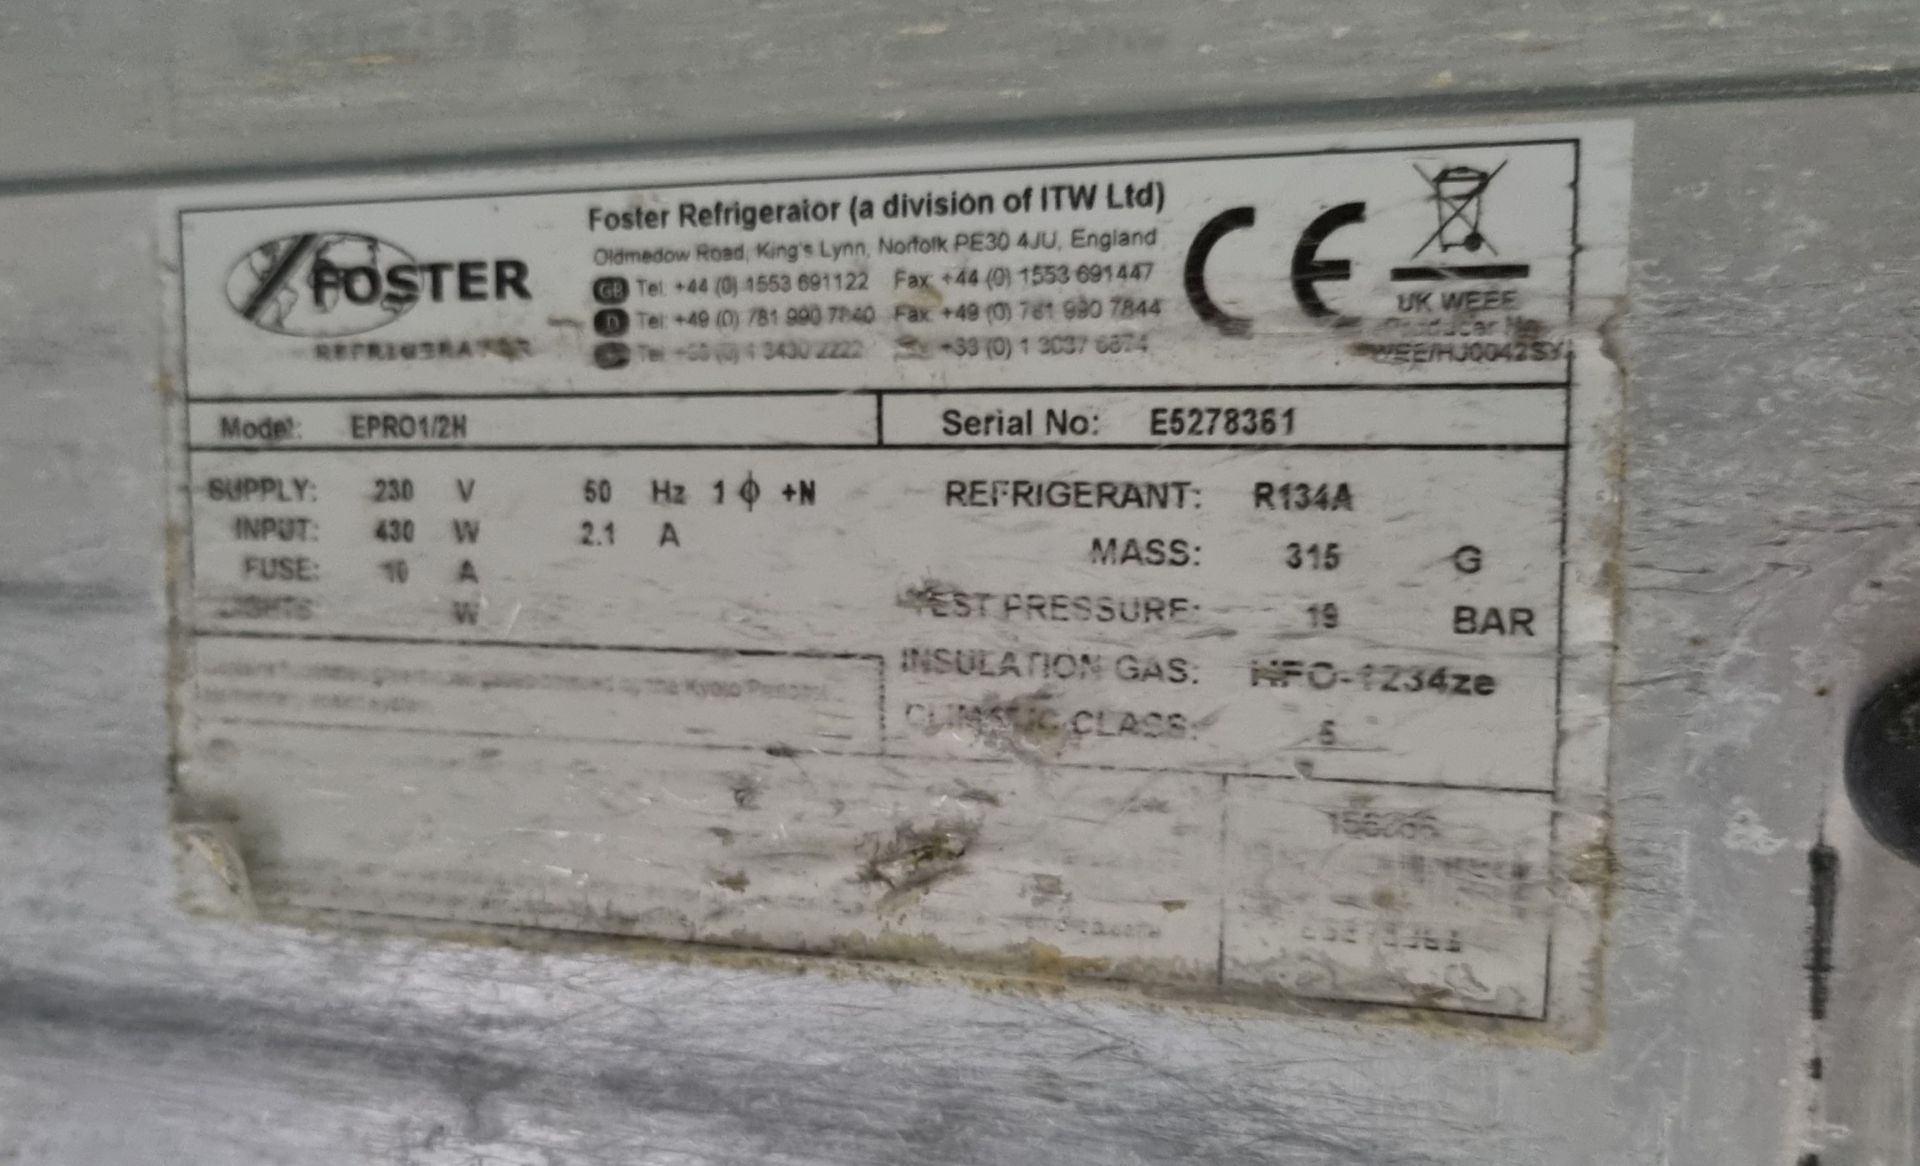 Foster EPRO 1/2H stainless steel double door counter fridge - W 1415 x D 705 x H 995mm - Image 4 of 5